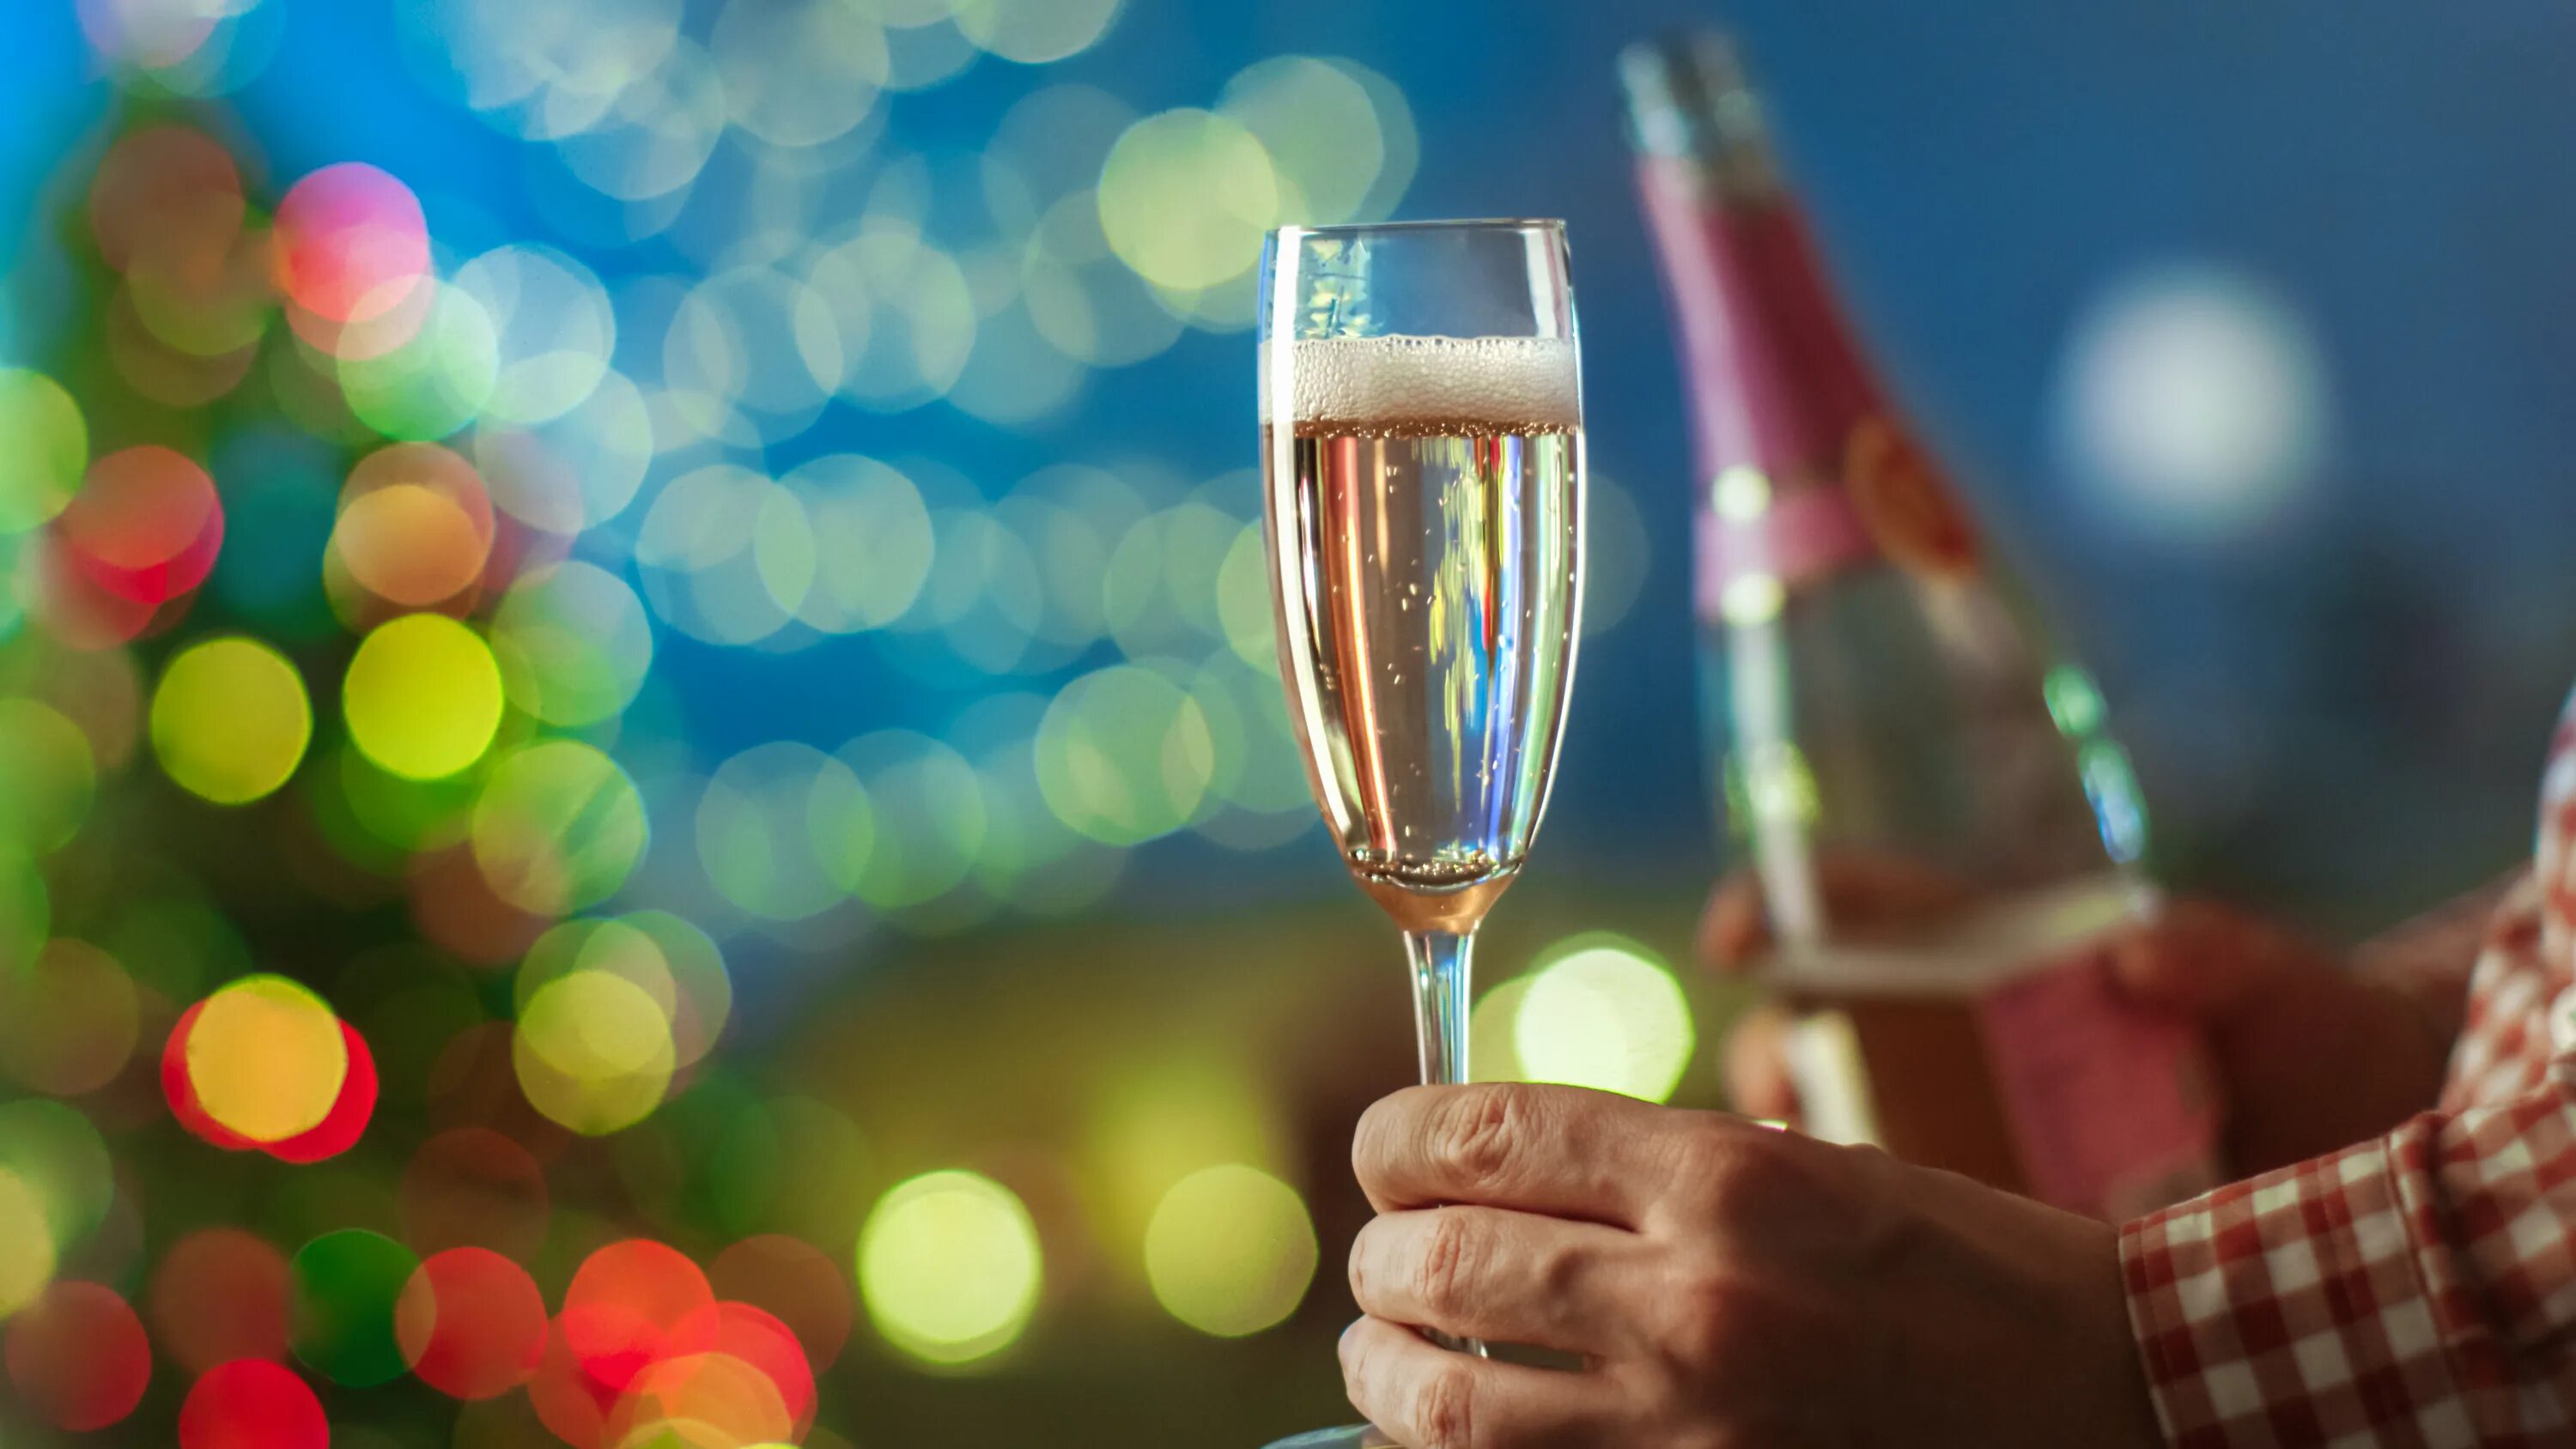 We like celebrating. Шампанское новый год. Новый год шампанское в бокале люди.